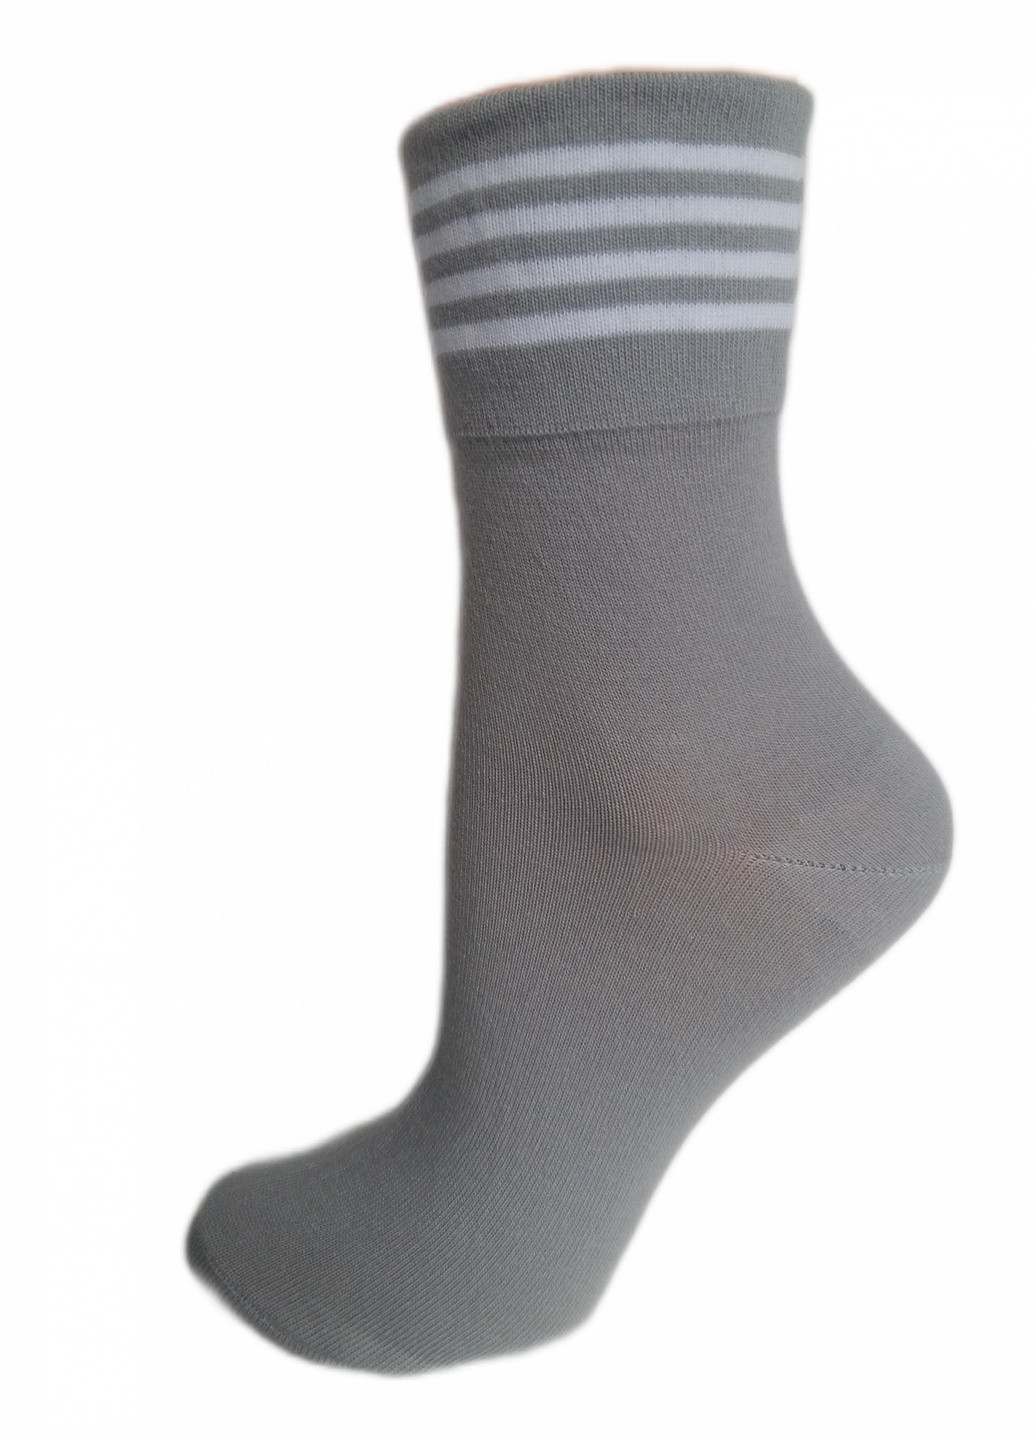 Шкарпетки ТМ "Нова пара" 105 без резинки НОВА ПАРА середня висота (257155401)